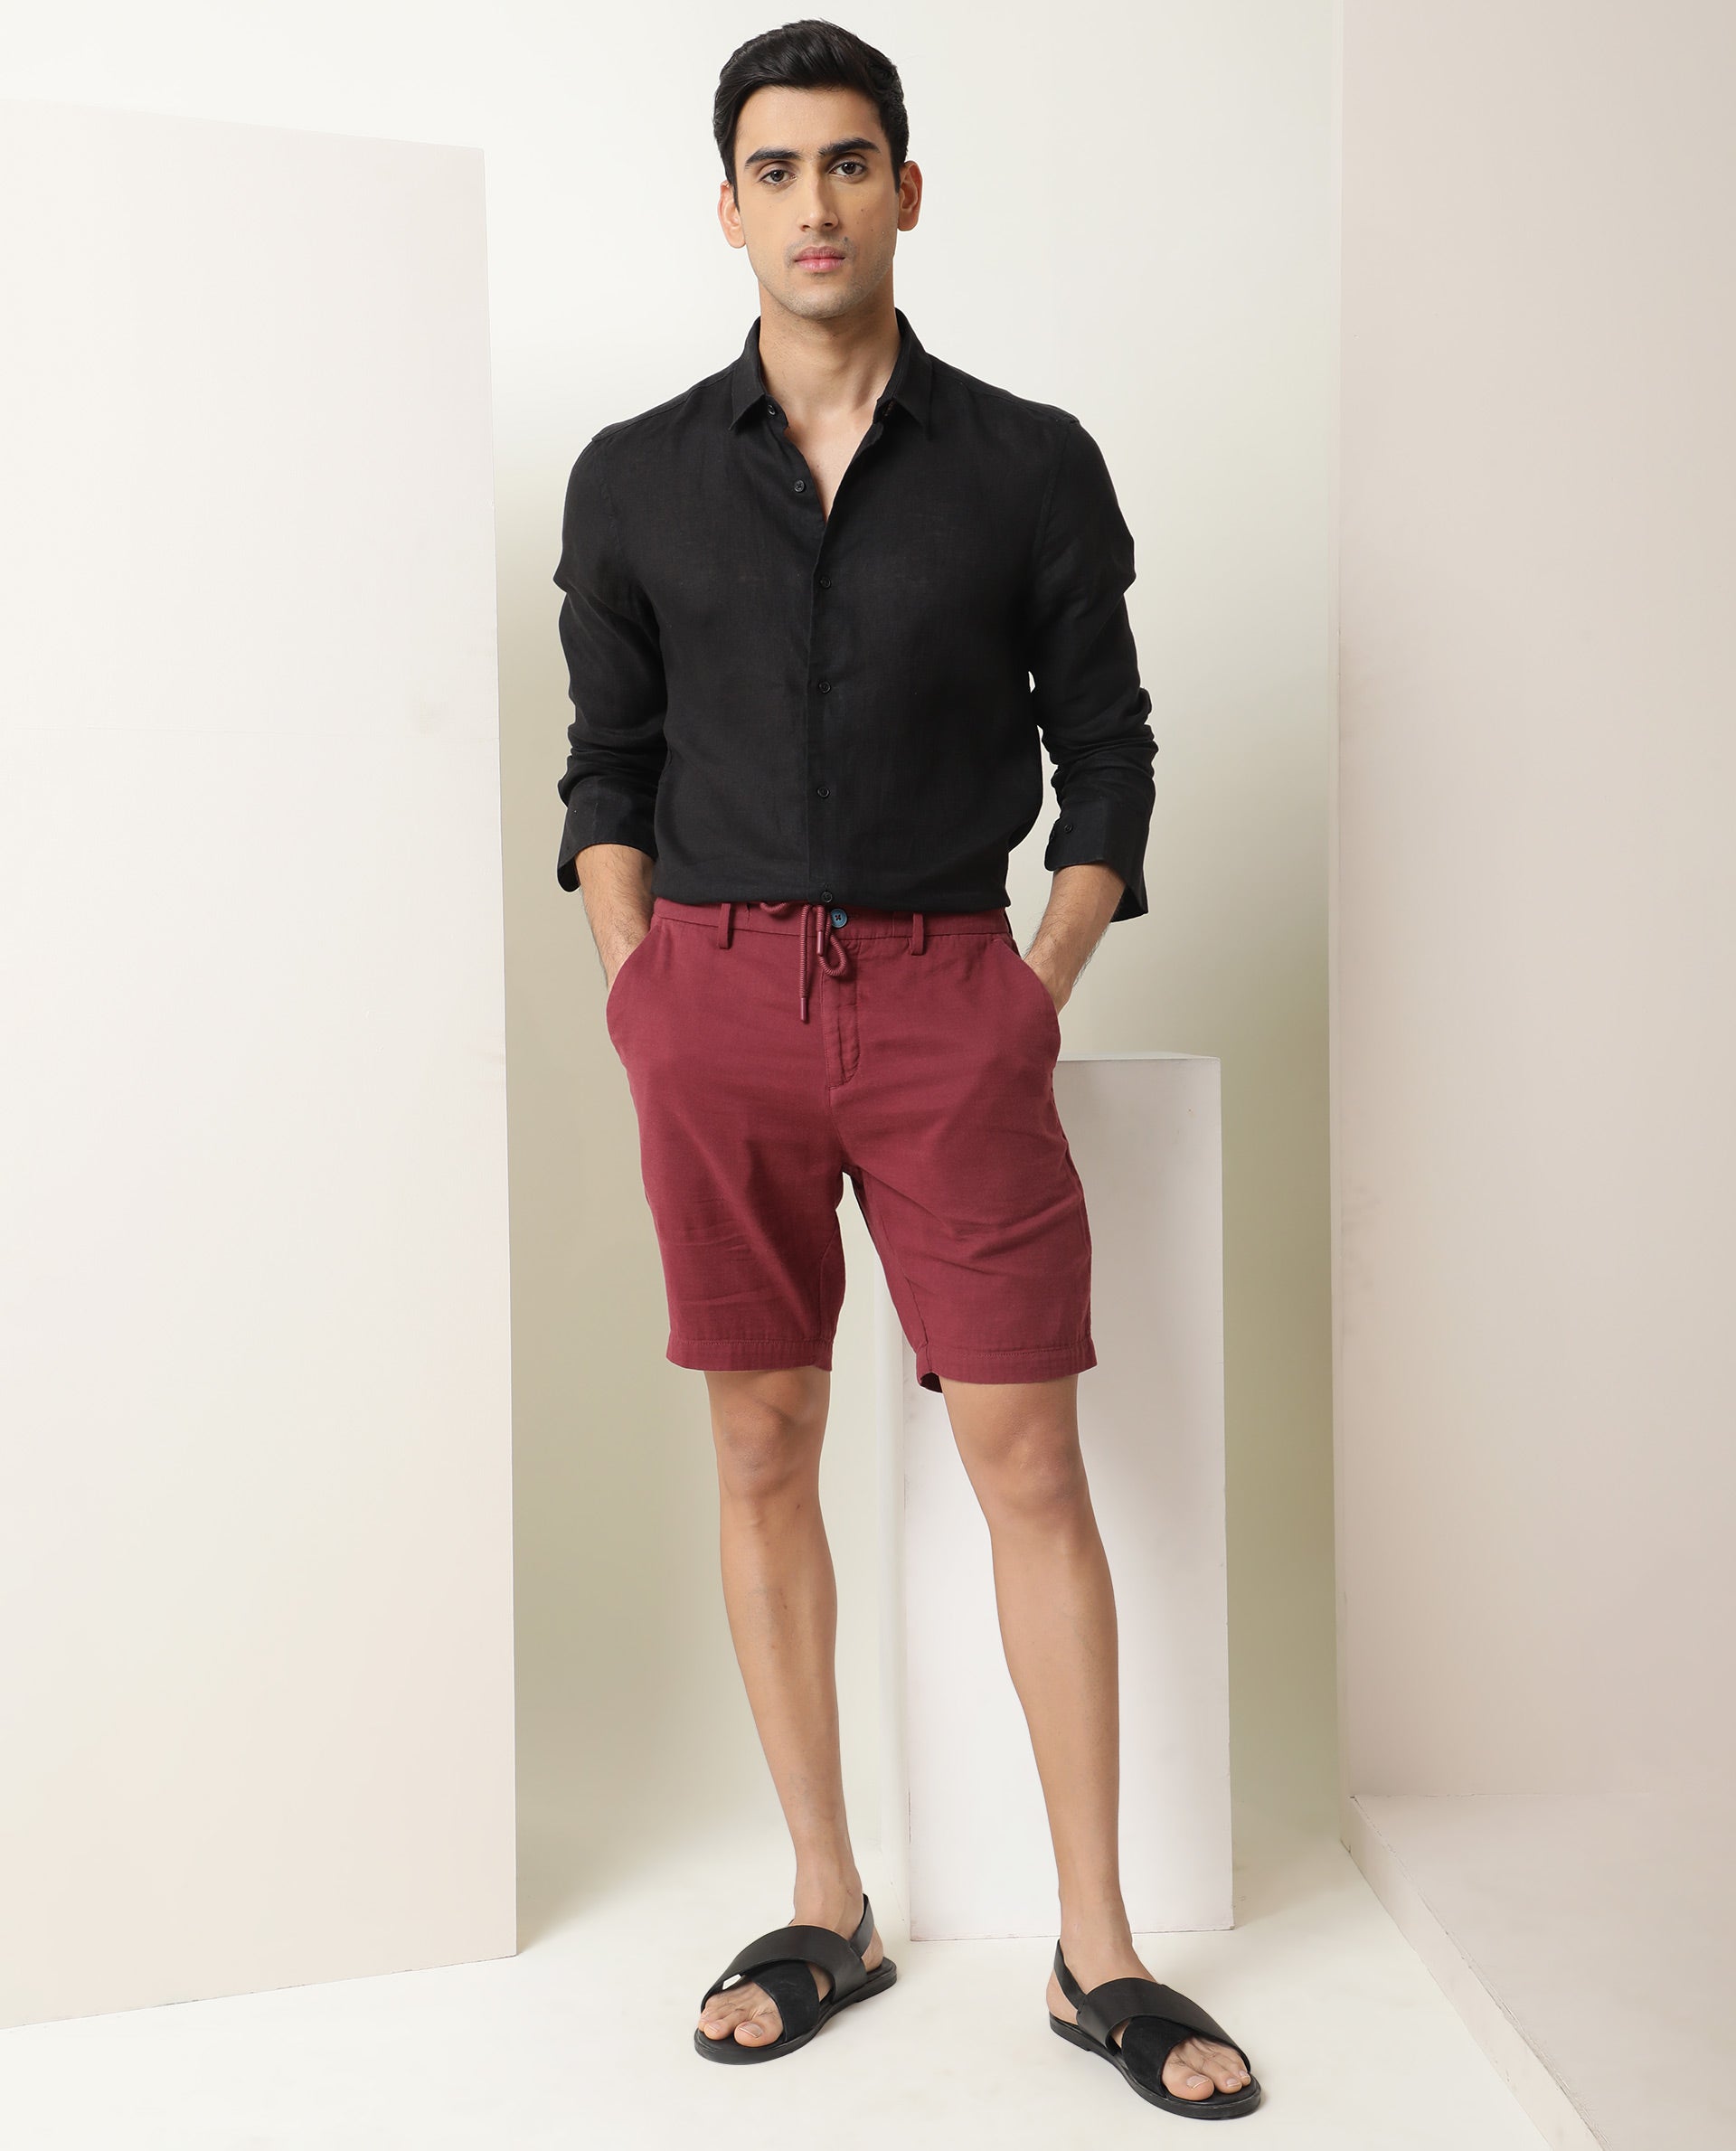 Men Summer Thin Loose Shorts Casual Pockets Cargo Short Pants Trousers  Bottoms | eBay